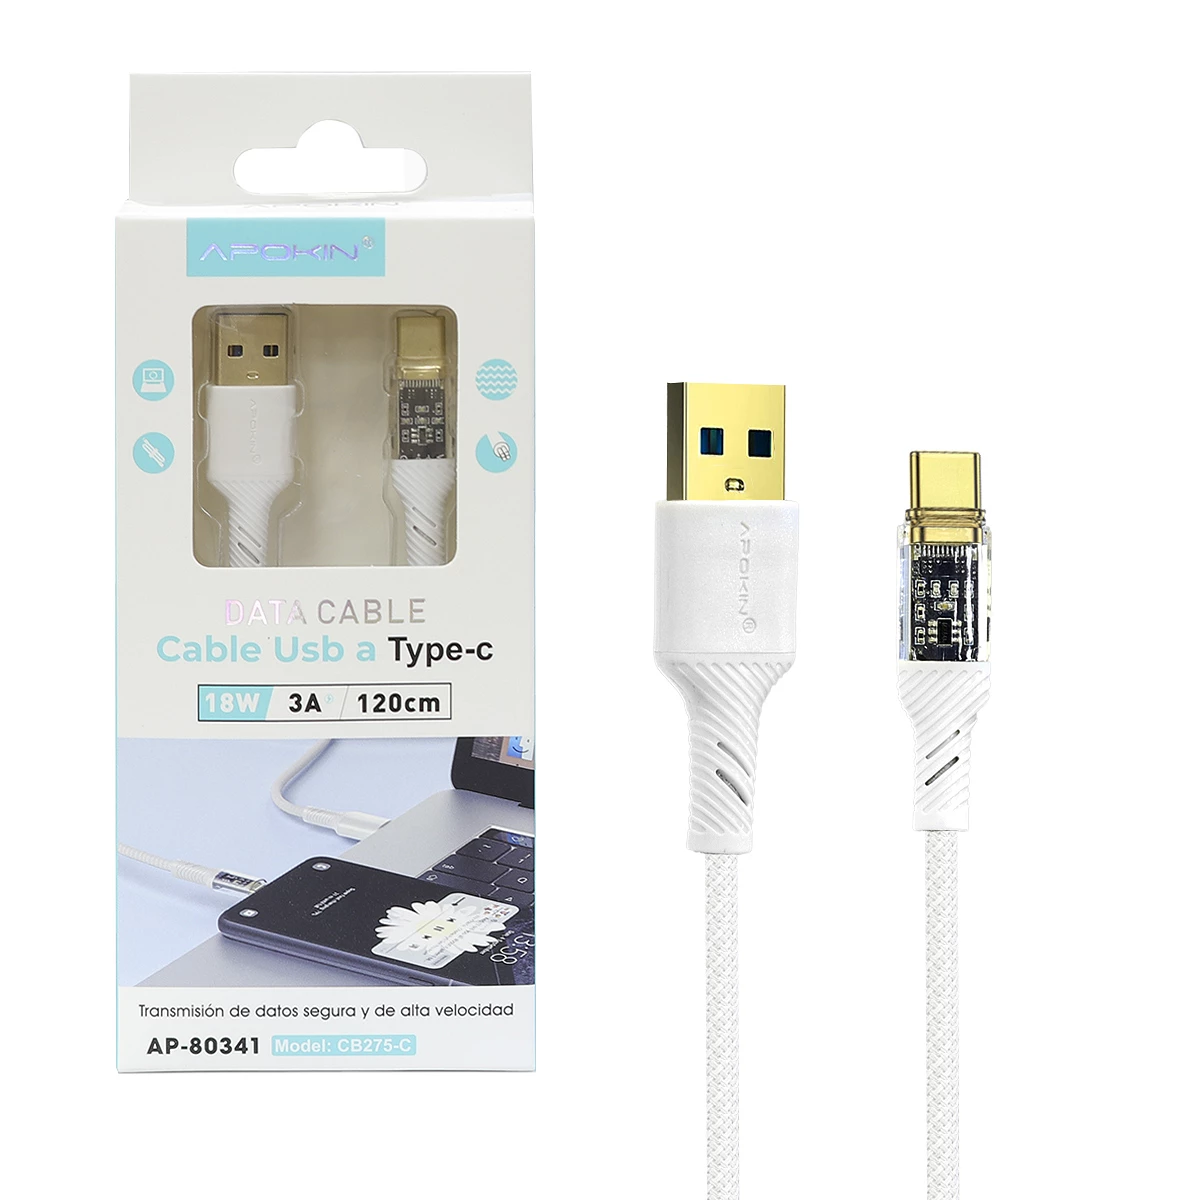 Cargador Doble USB-A 2.4 A Sin Cable APOKIN PC913Y - Blanco